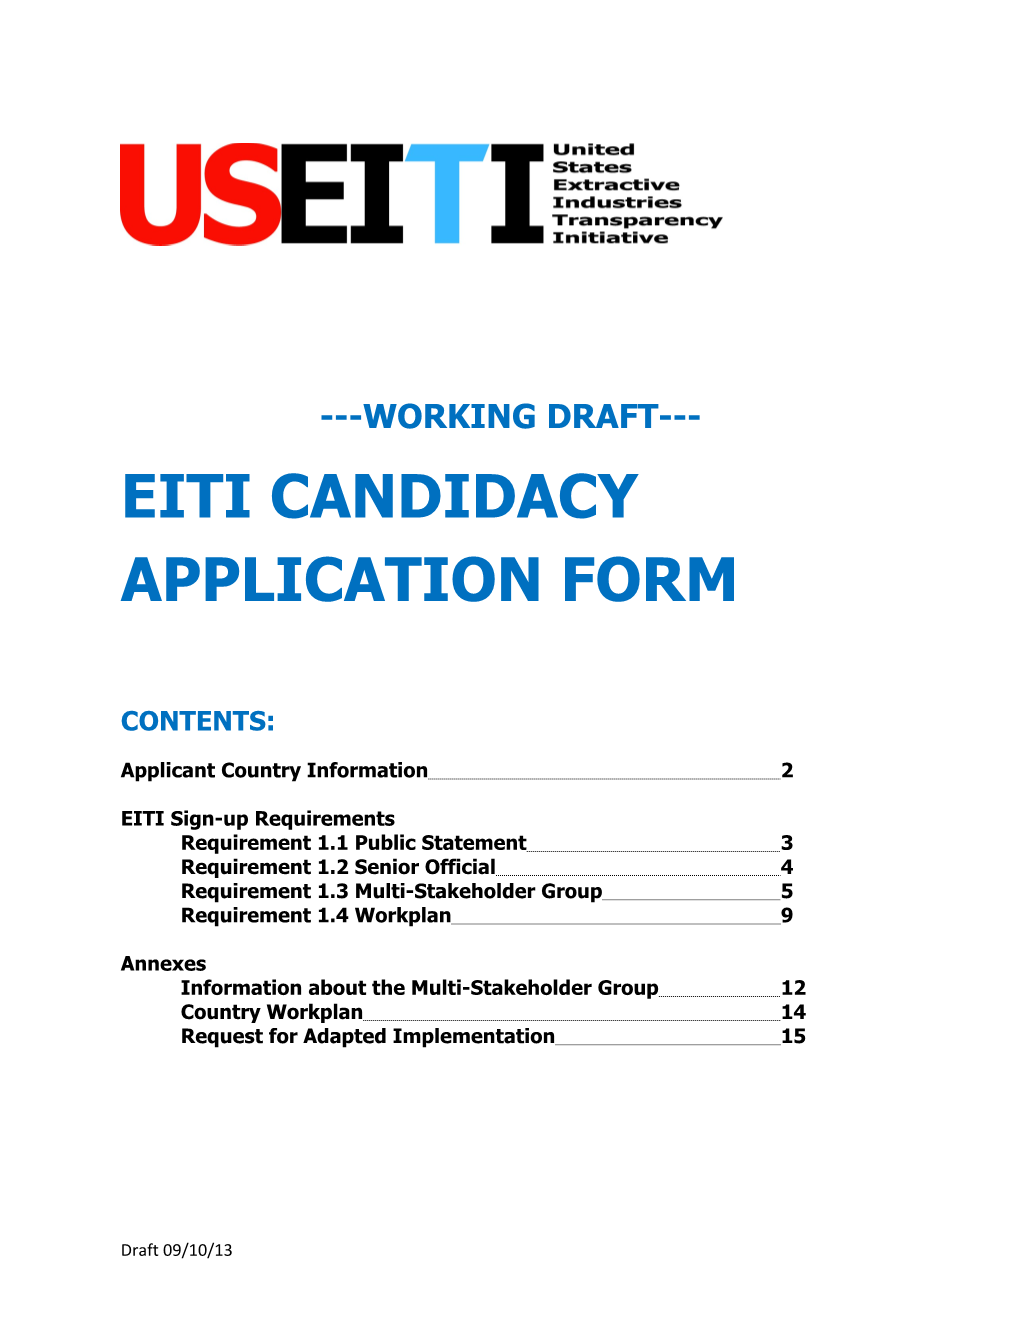 EITI Candidacy Application Form